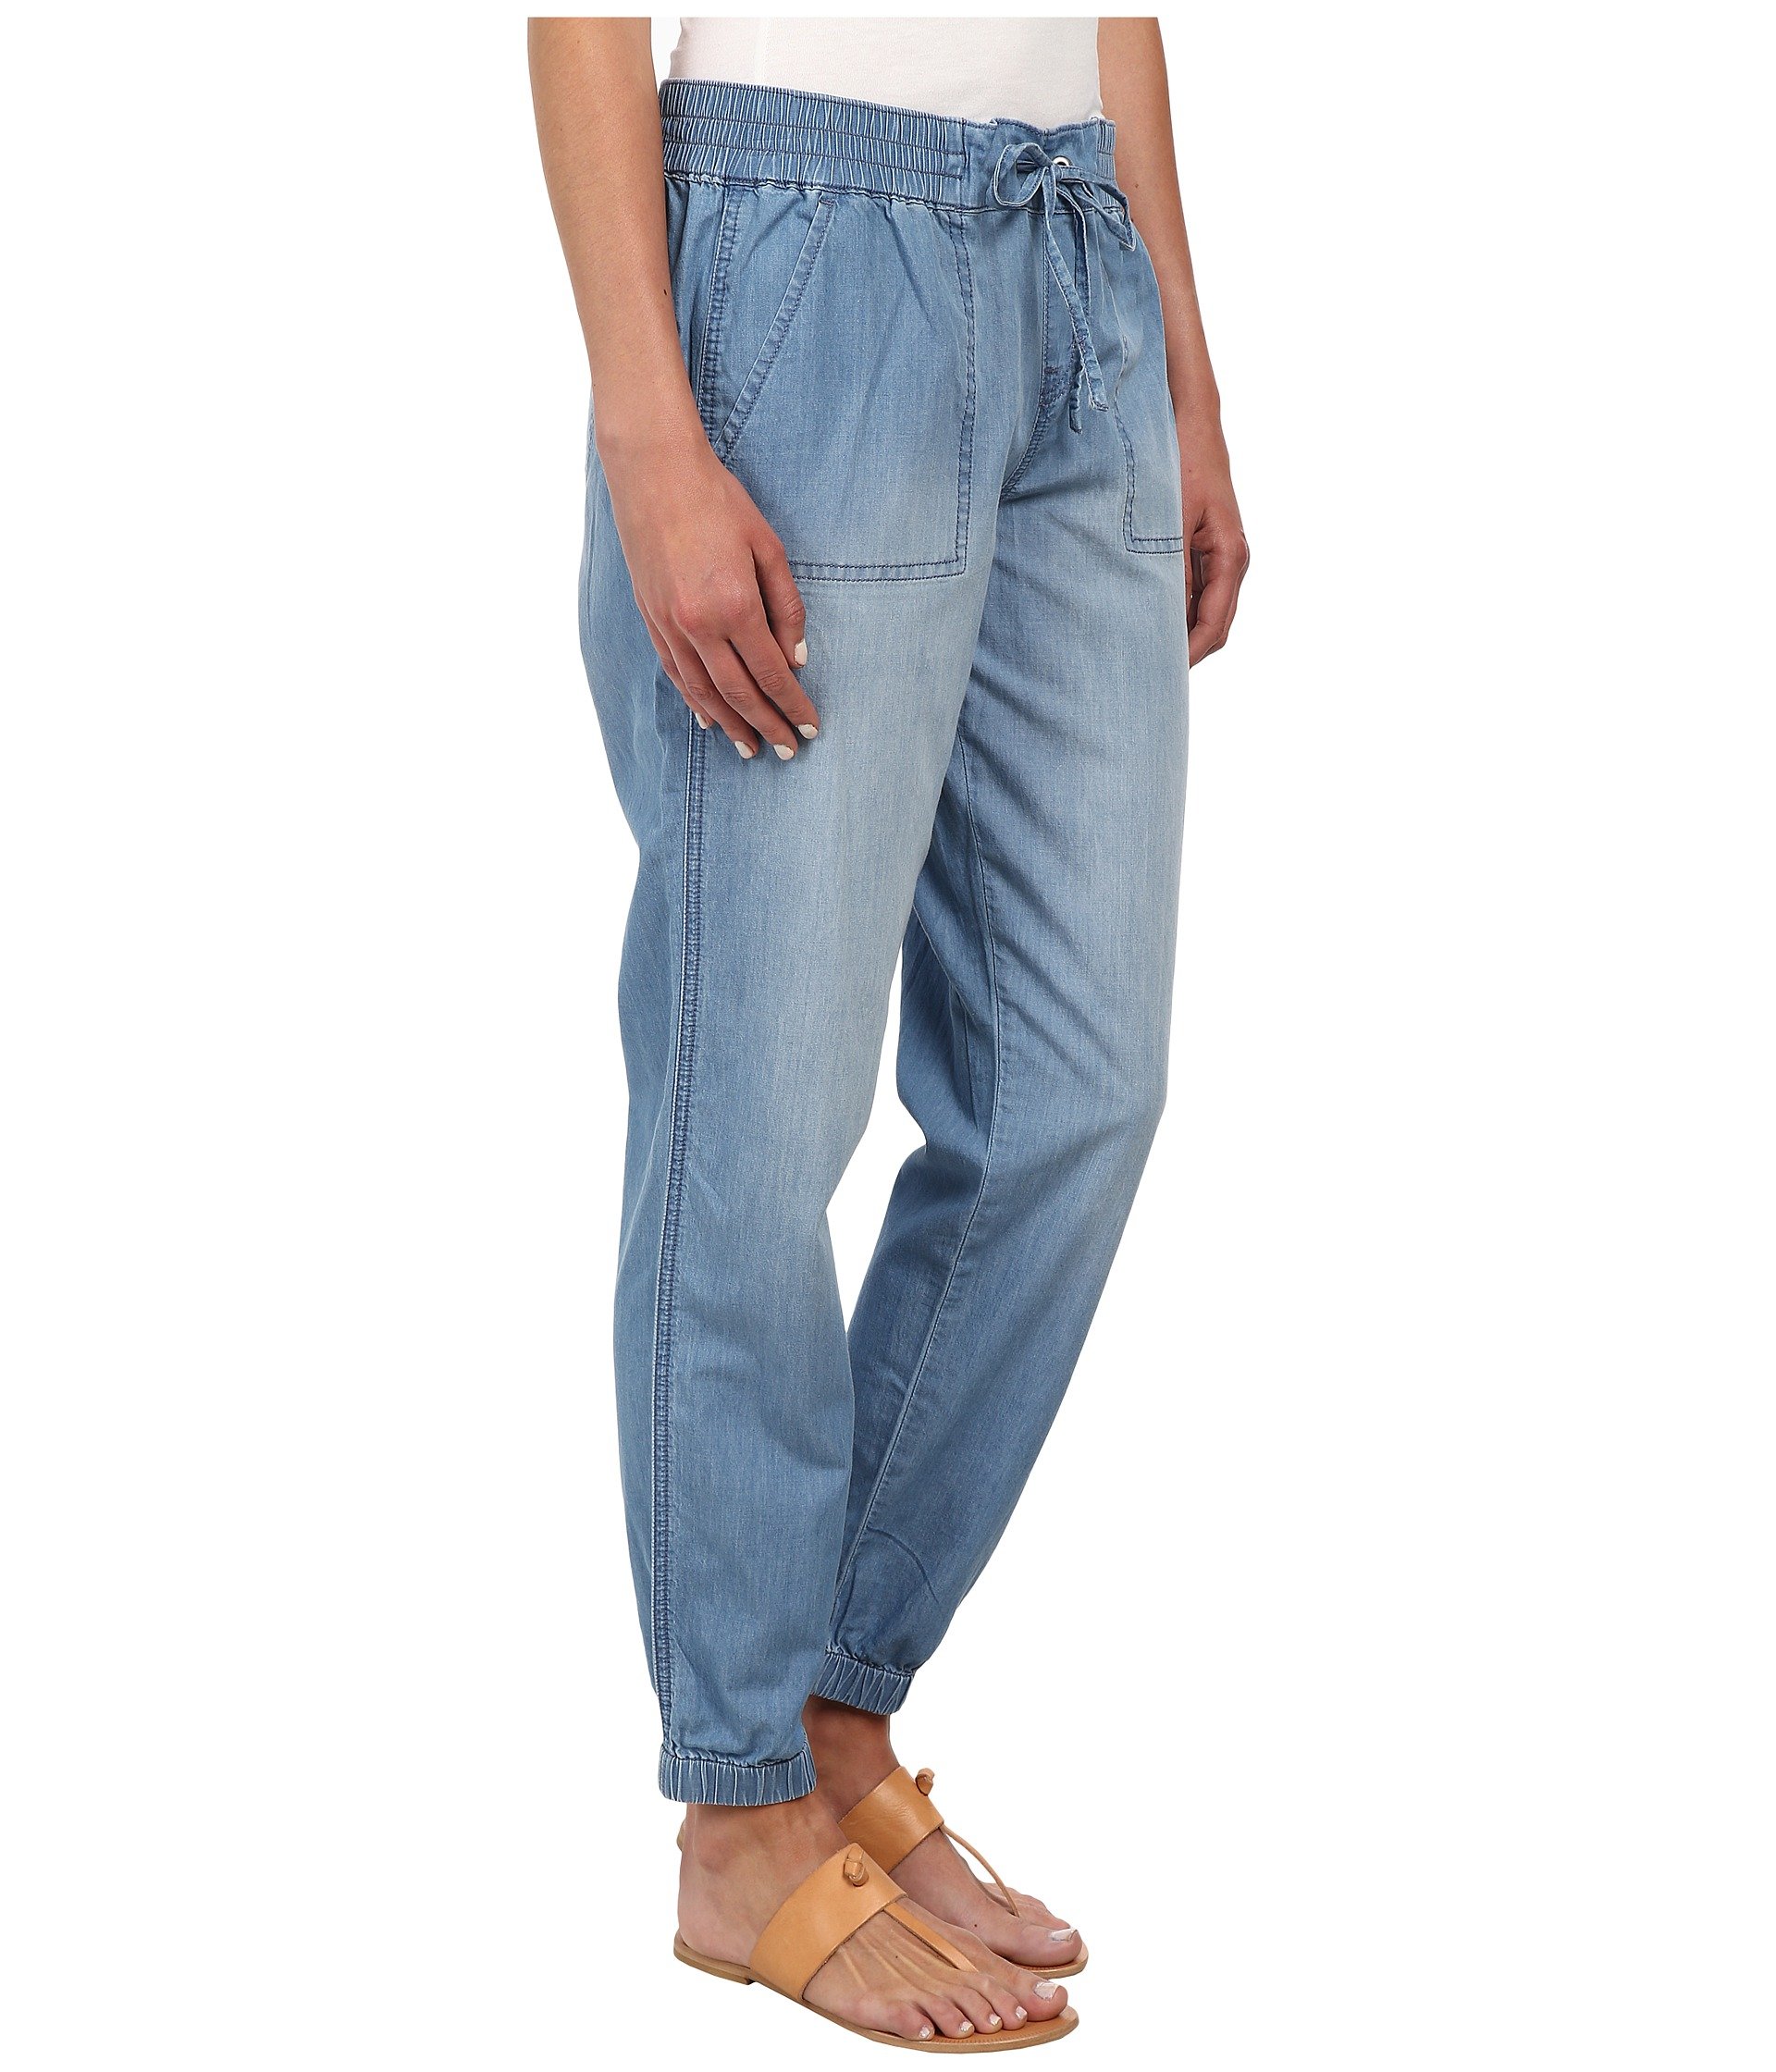 Lyst - Calvin Klein Jeans Drawstring Denim Pants In Colbalt Blue in Blue